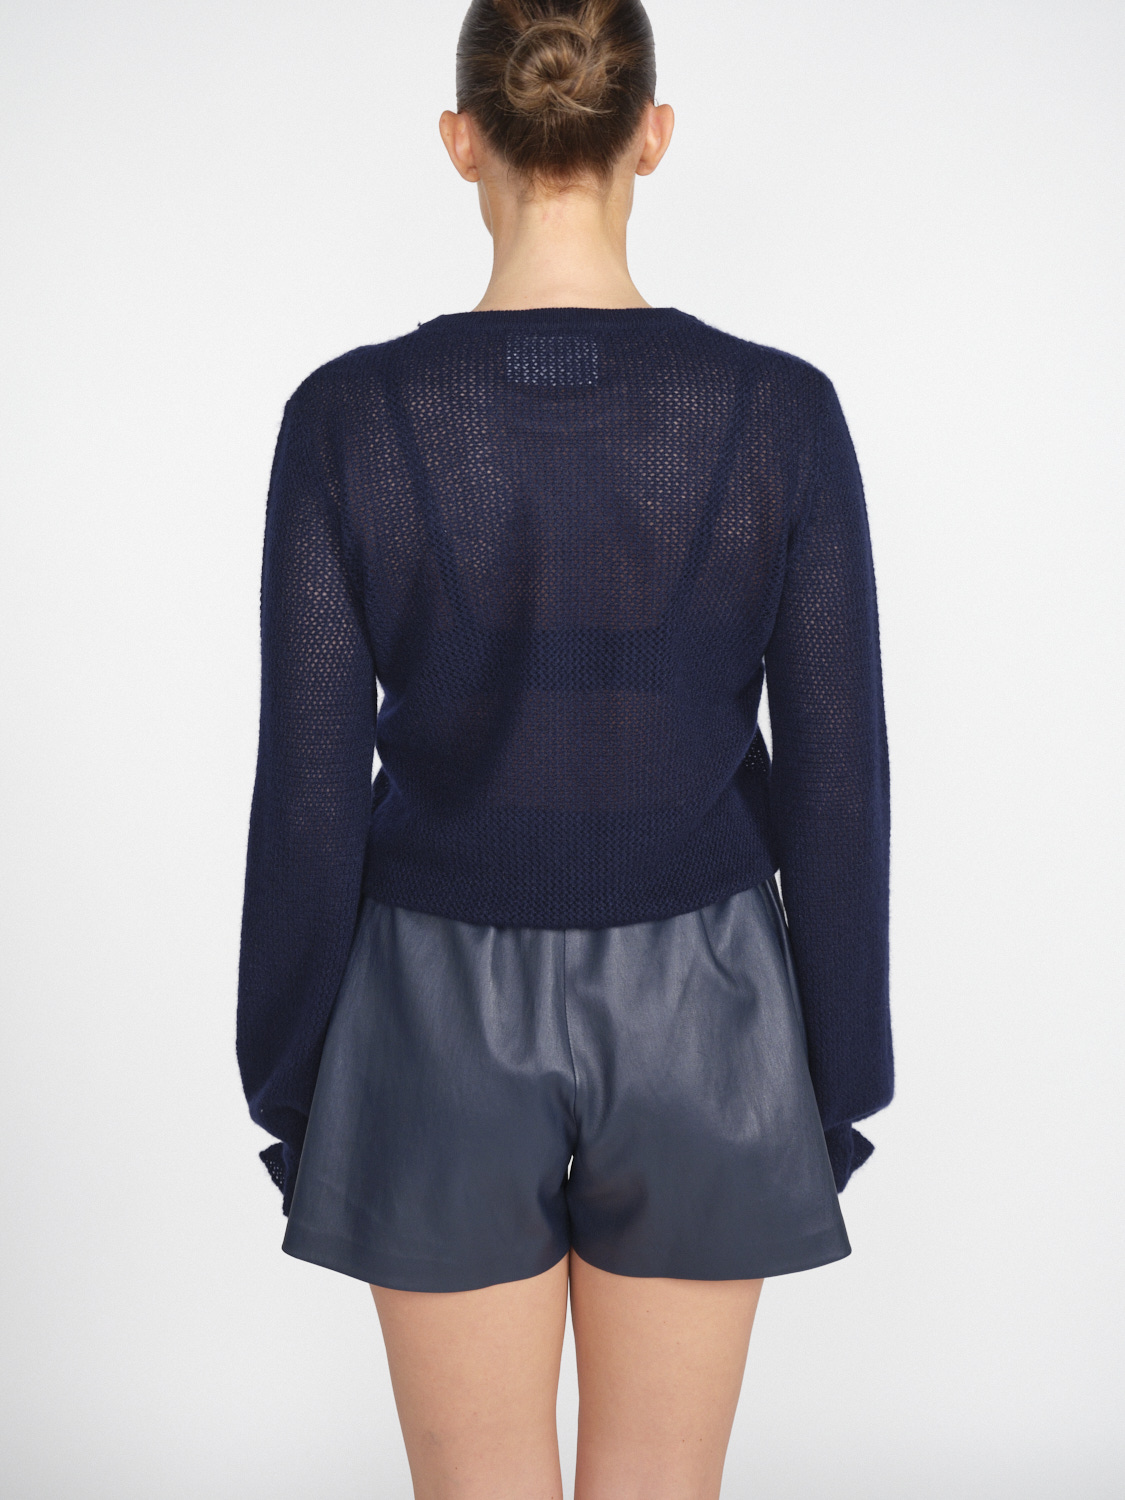 Lisa Yang Leanne - Ajour knit cashmere jumper  marine XS/S